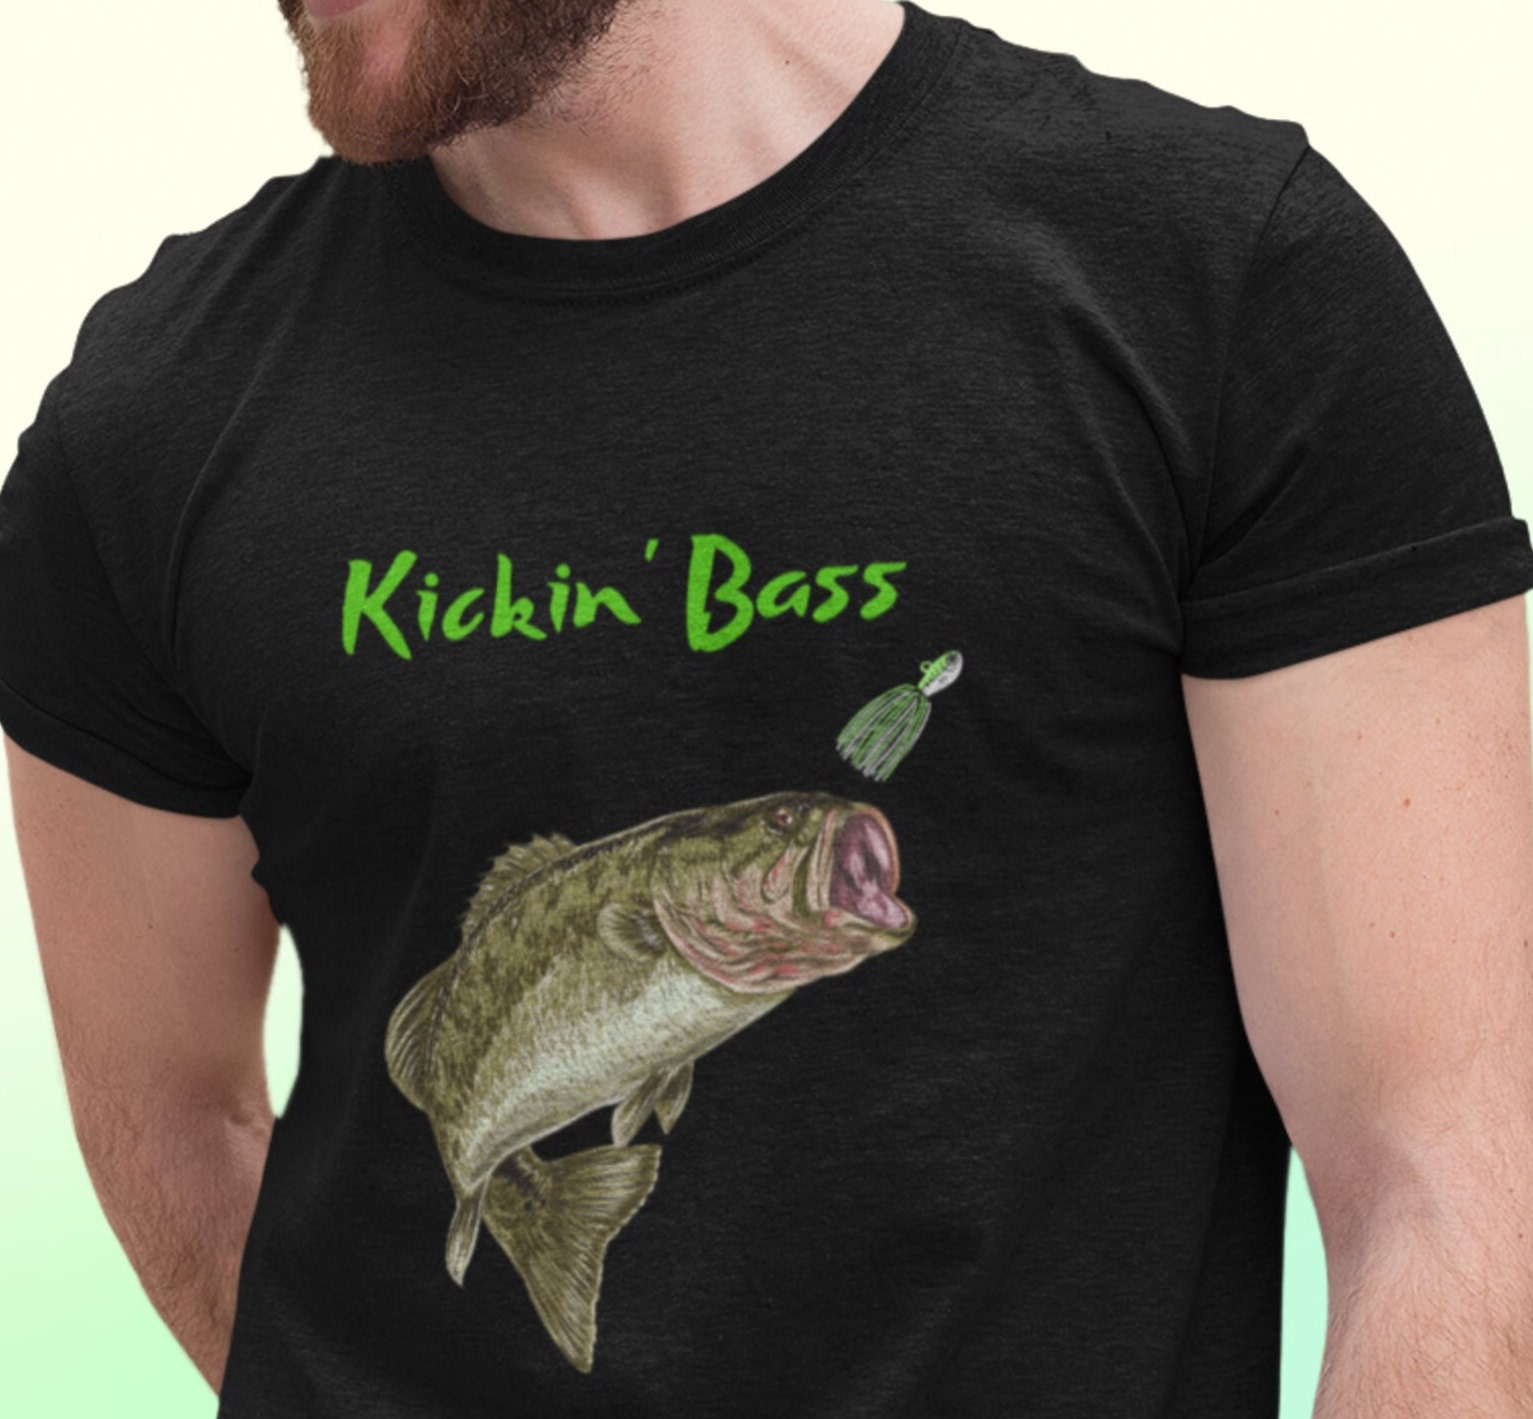 Kickin' Bass T-shirt, Bass Fishing Shirt 